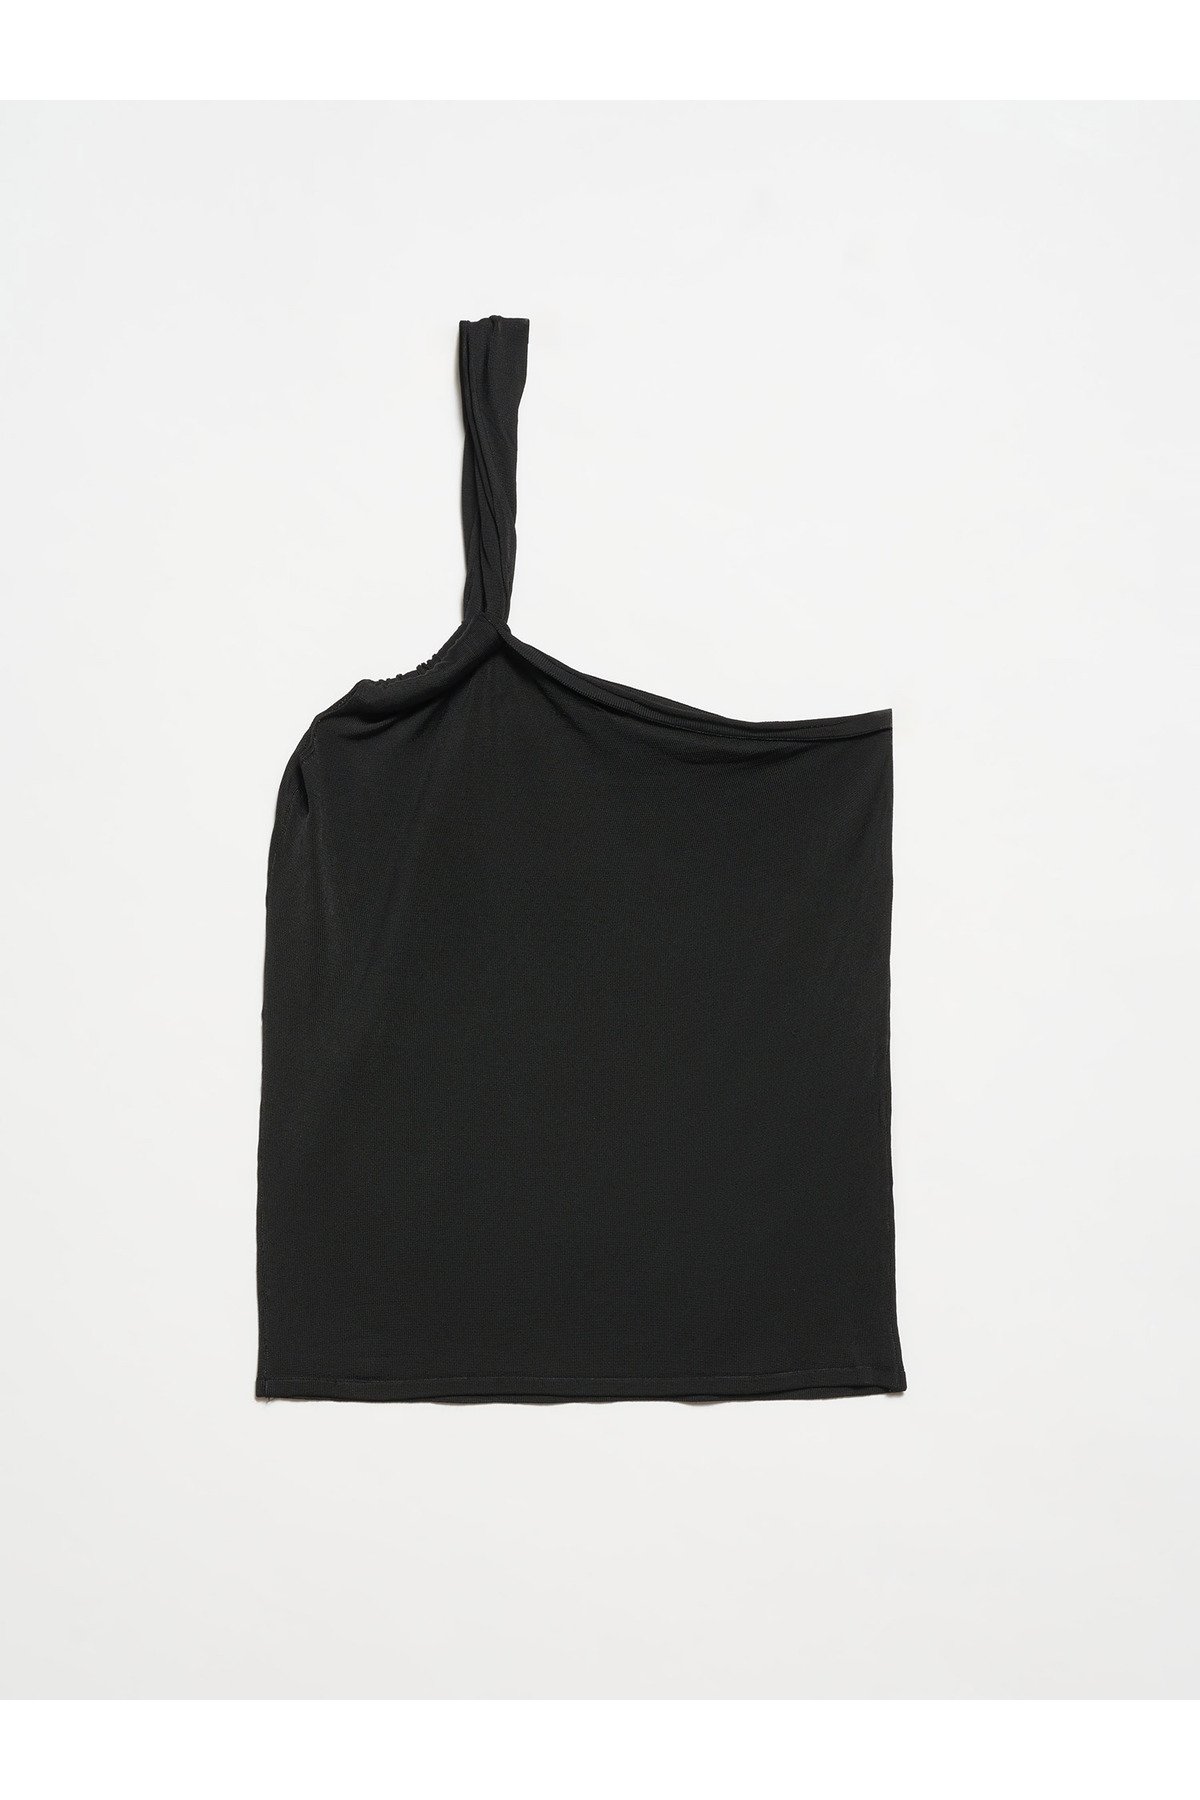 Dilvin 10379 Double Strap One Shoulder Knitwear Blouse-Black